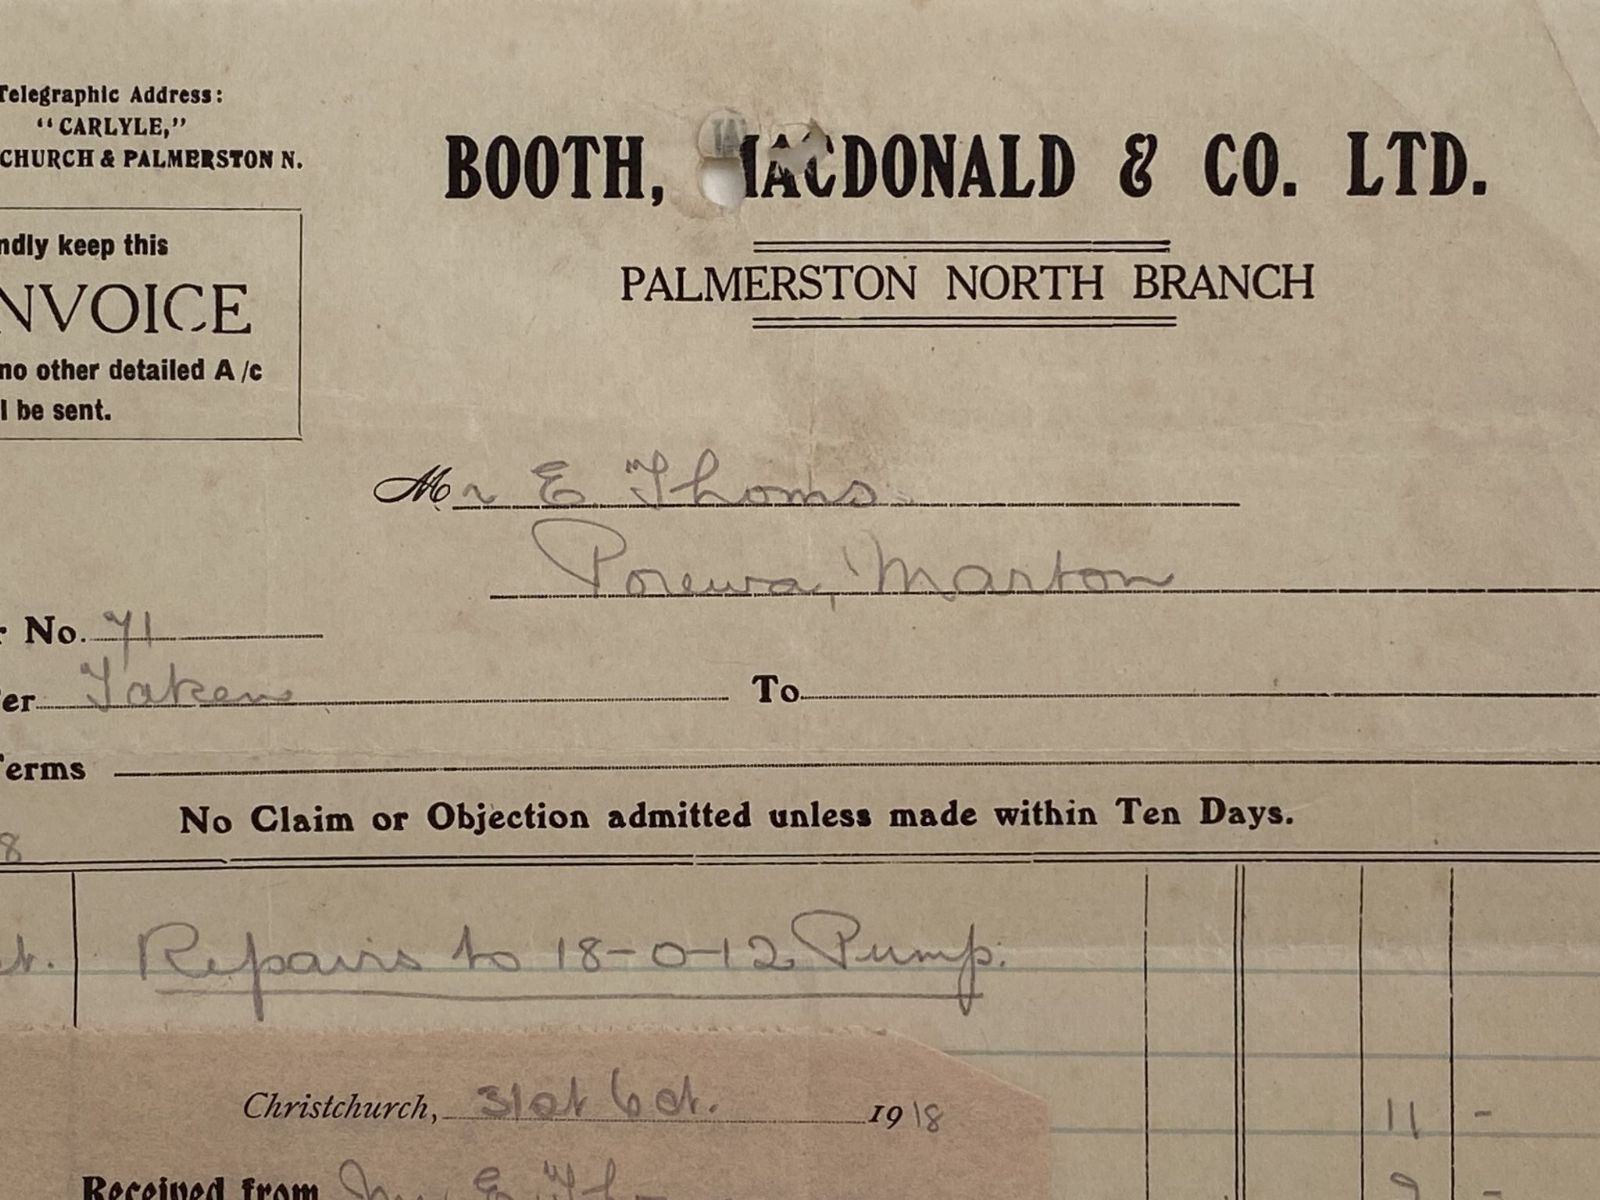 ANTIQUE INVOICE / RECEIPT: Booth, Macdonald & Co. Ltd. 1918